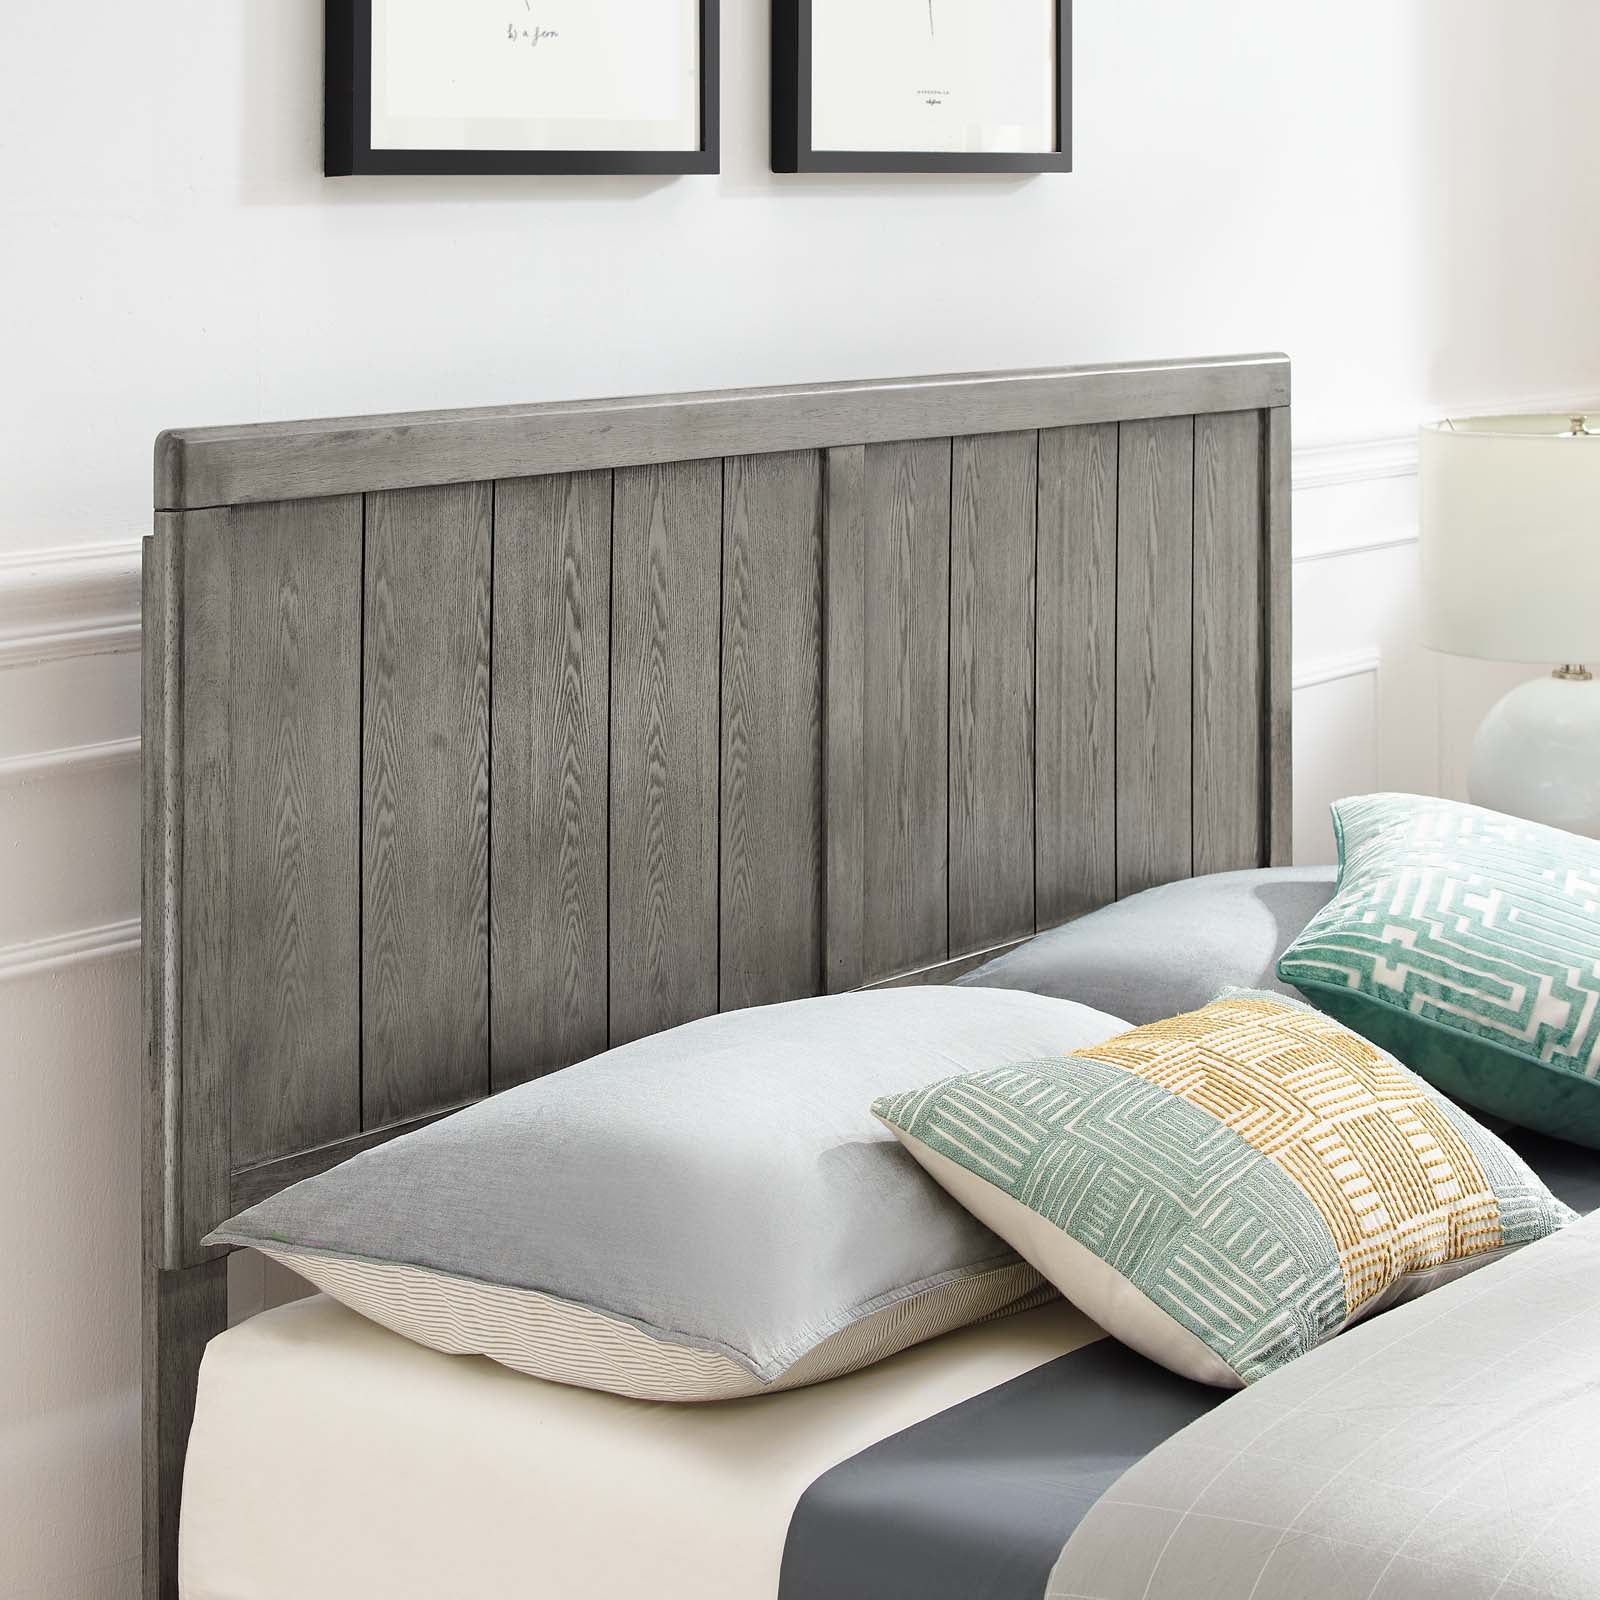 Alana Wood Platform Bed With Angular Frame - East Shore Modern Home Furnishings